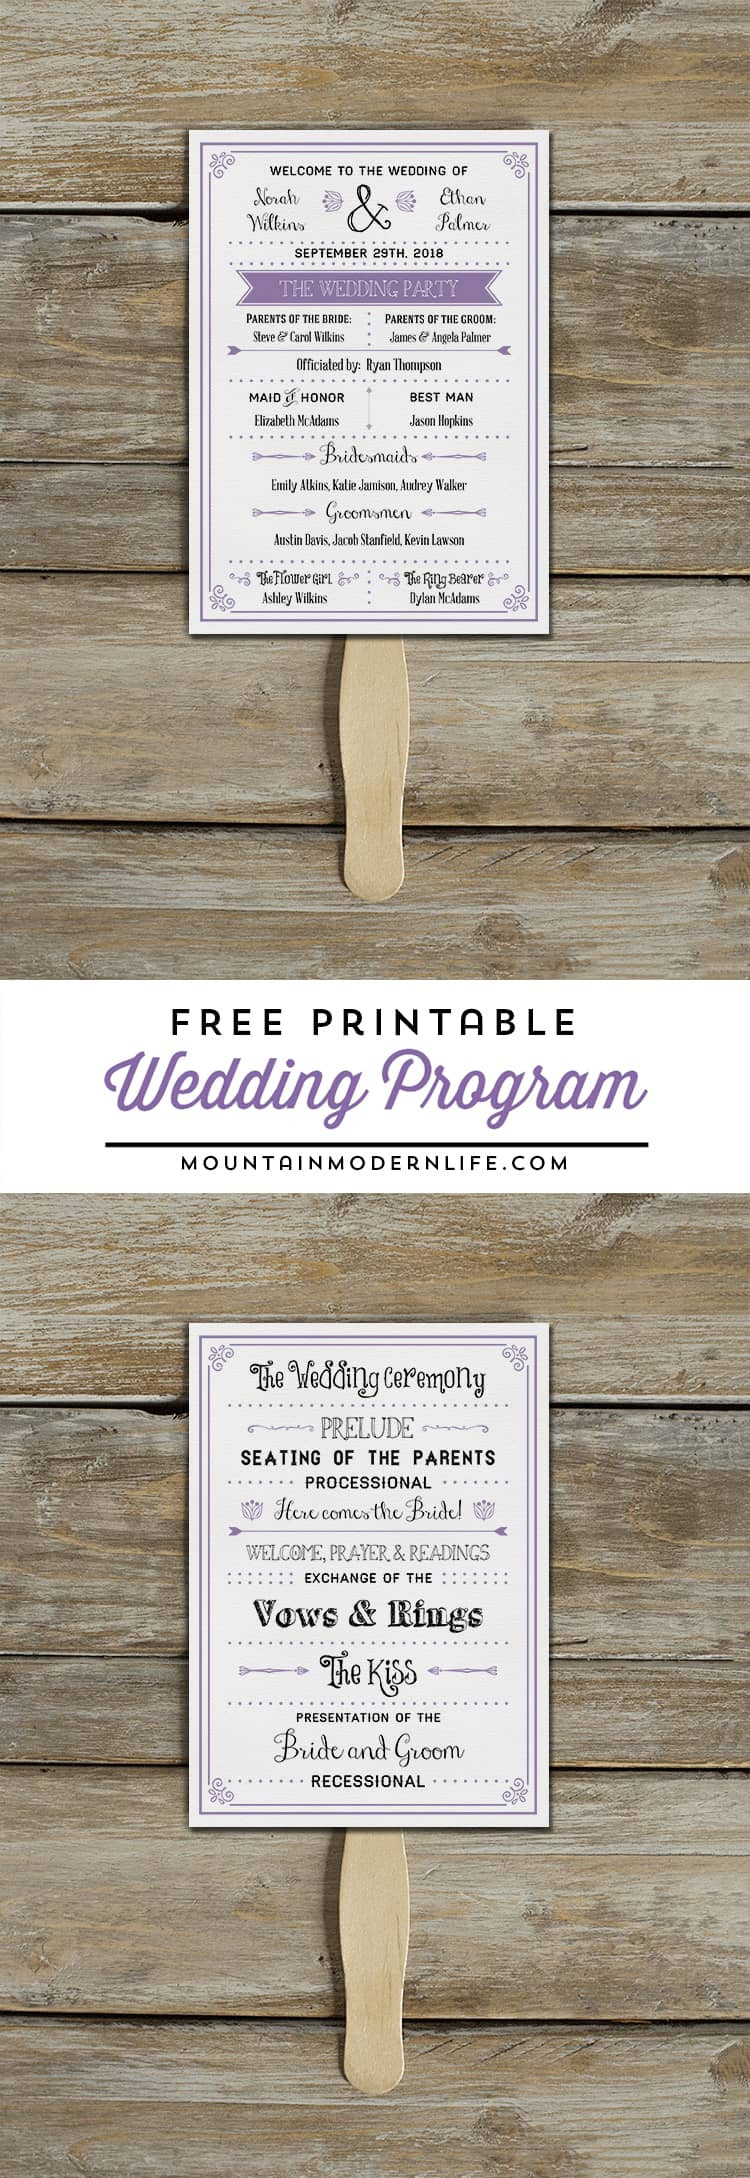 Best ideas about DIY Wedding Program Templates
. Save or Pin FREE Printable Wedding Program Now.